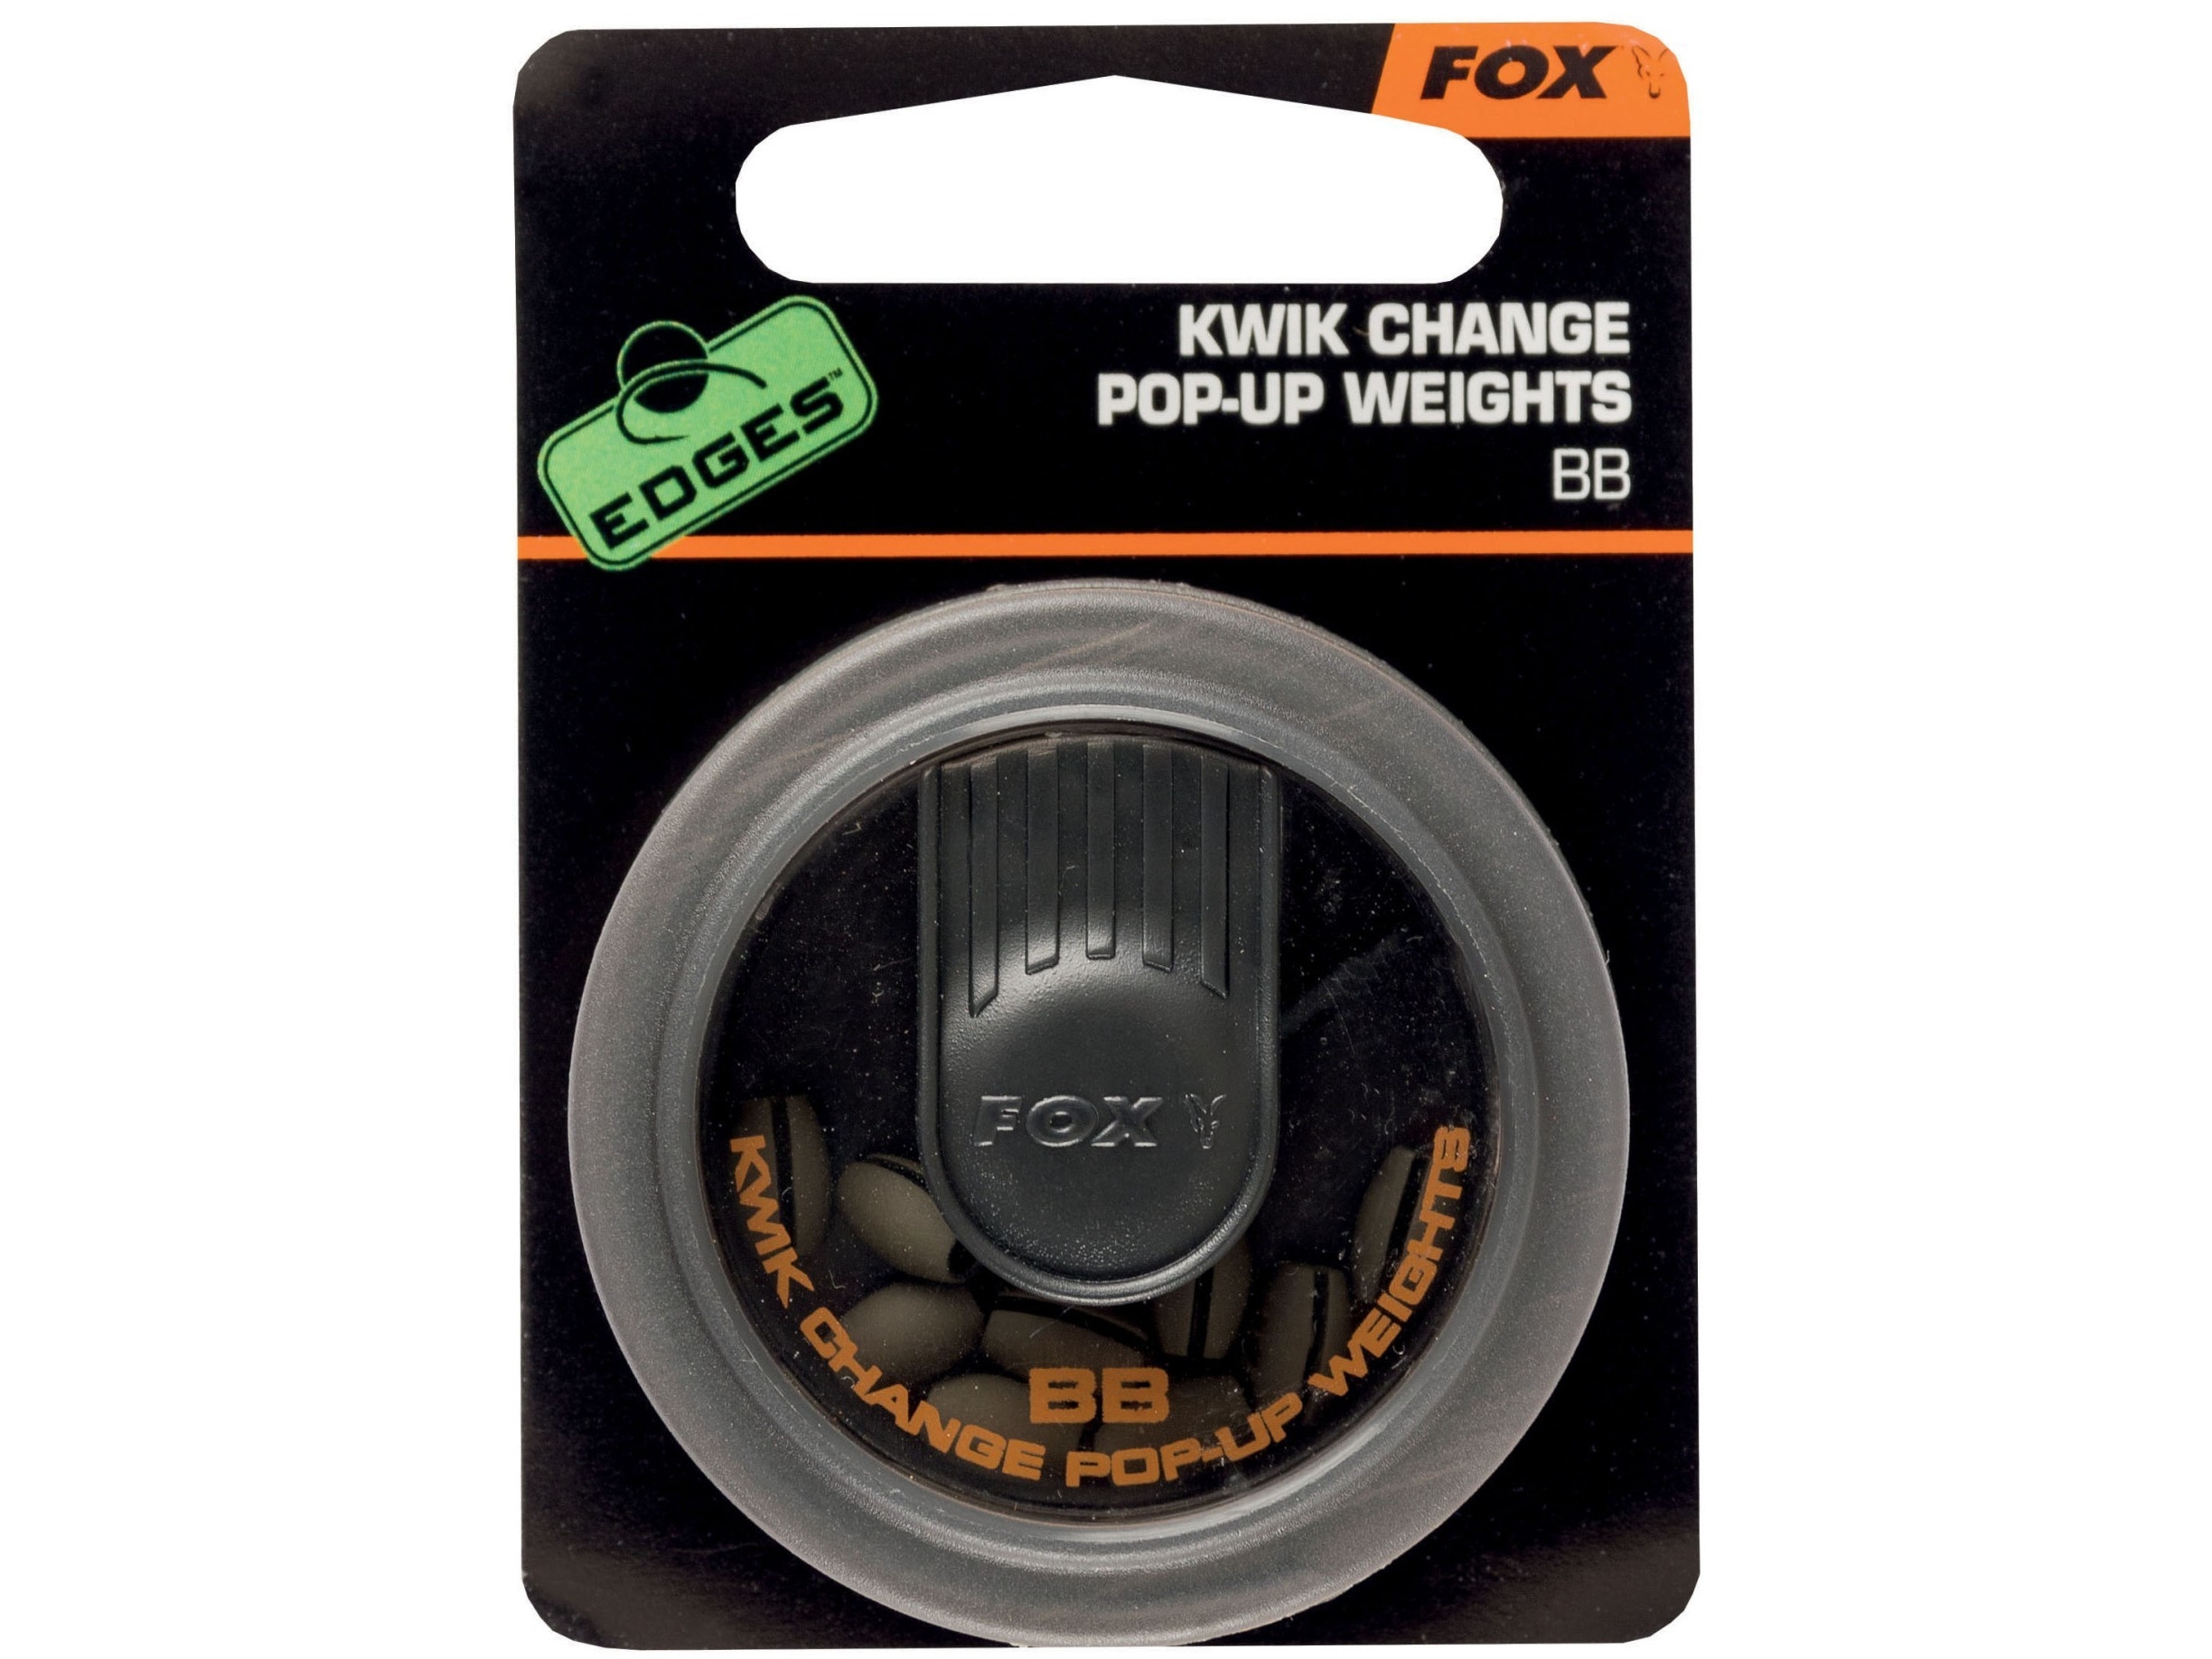 Fox Edges Kwick Change weights BB